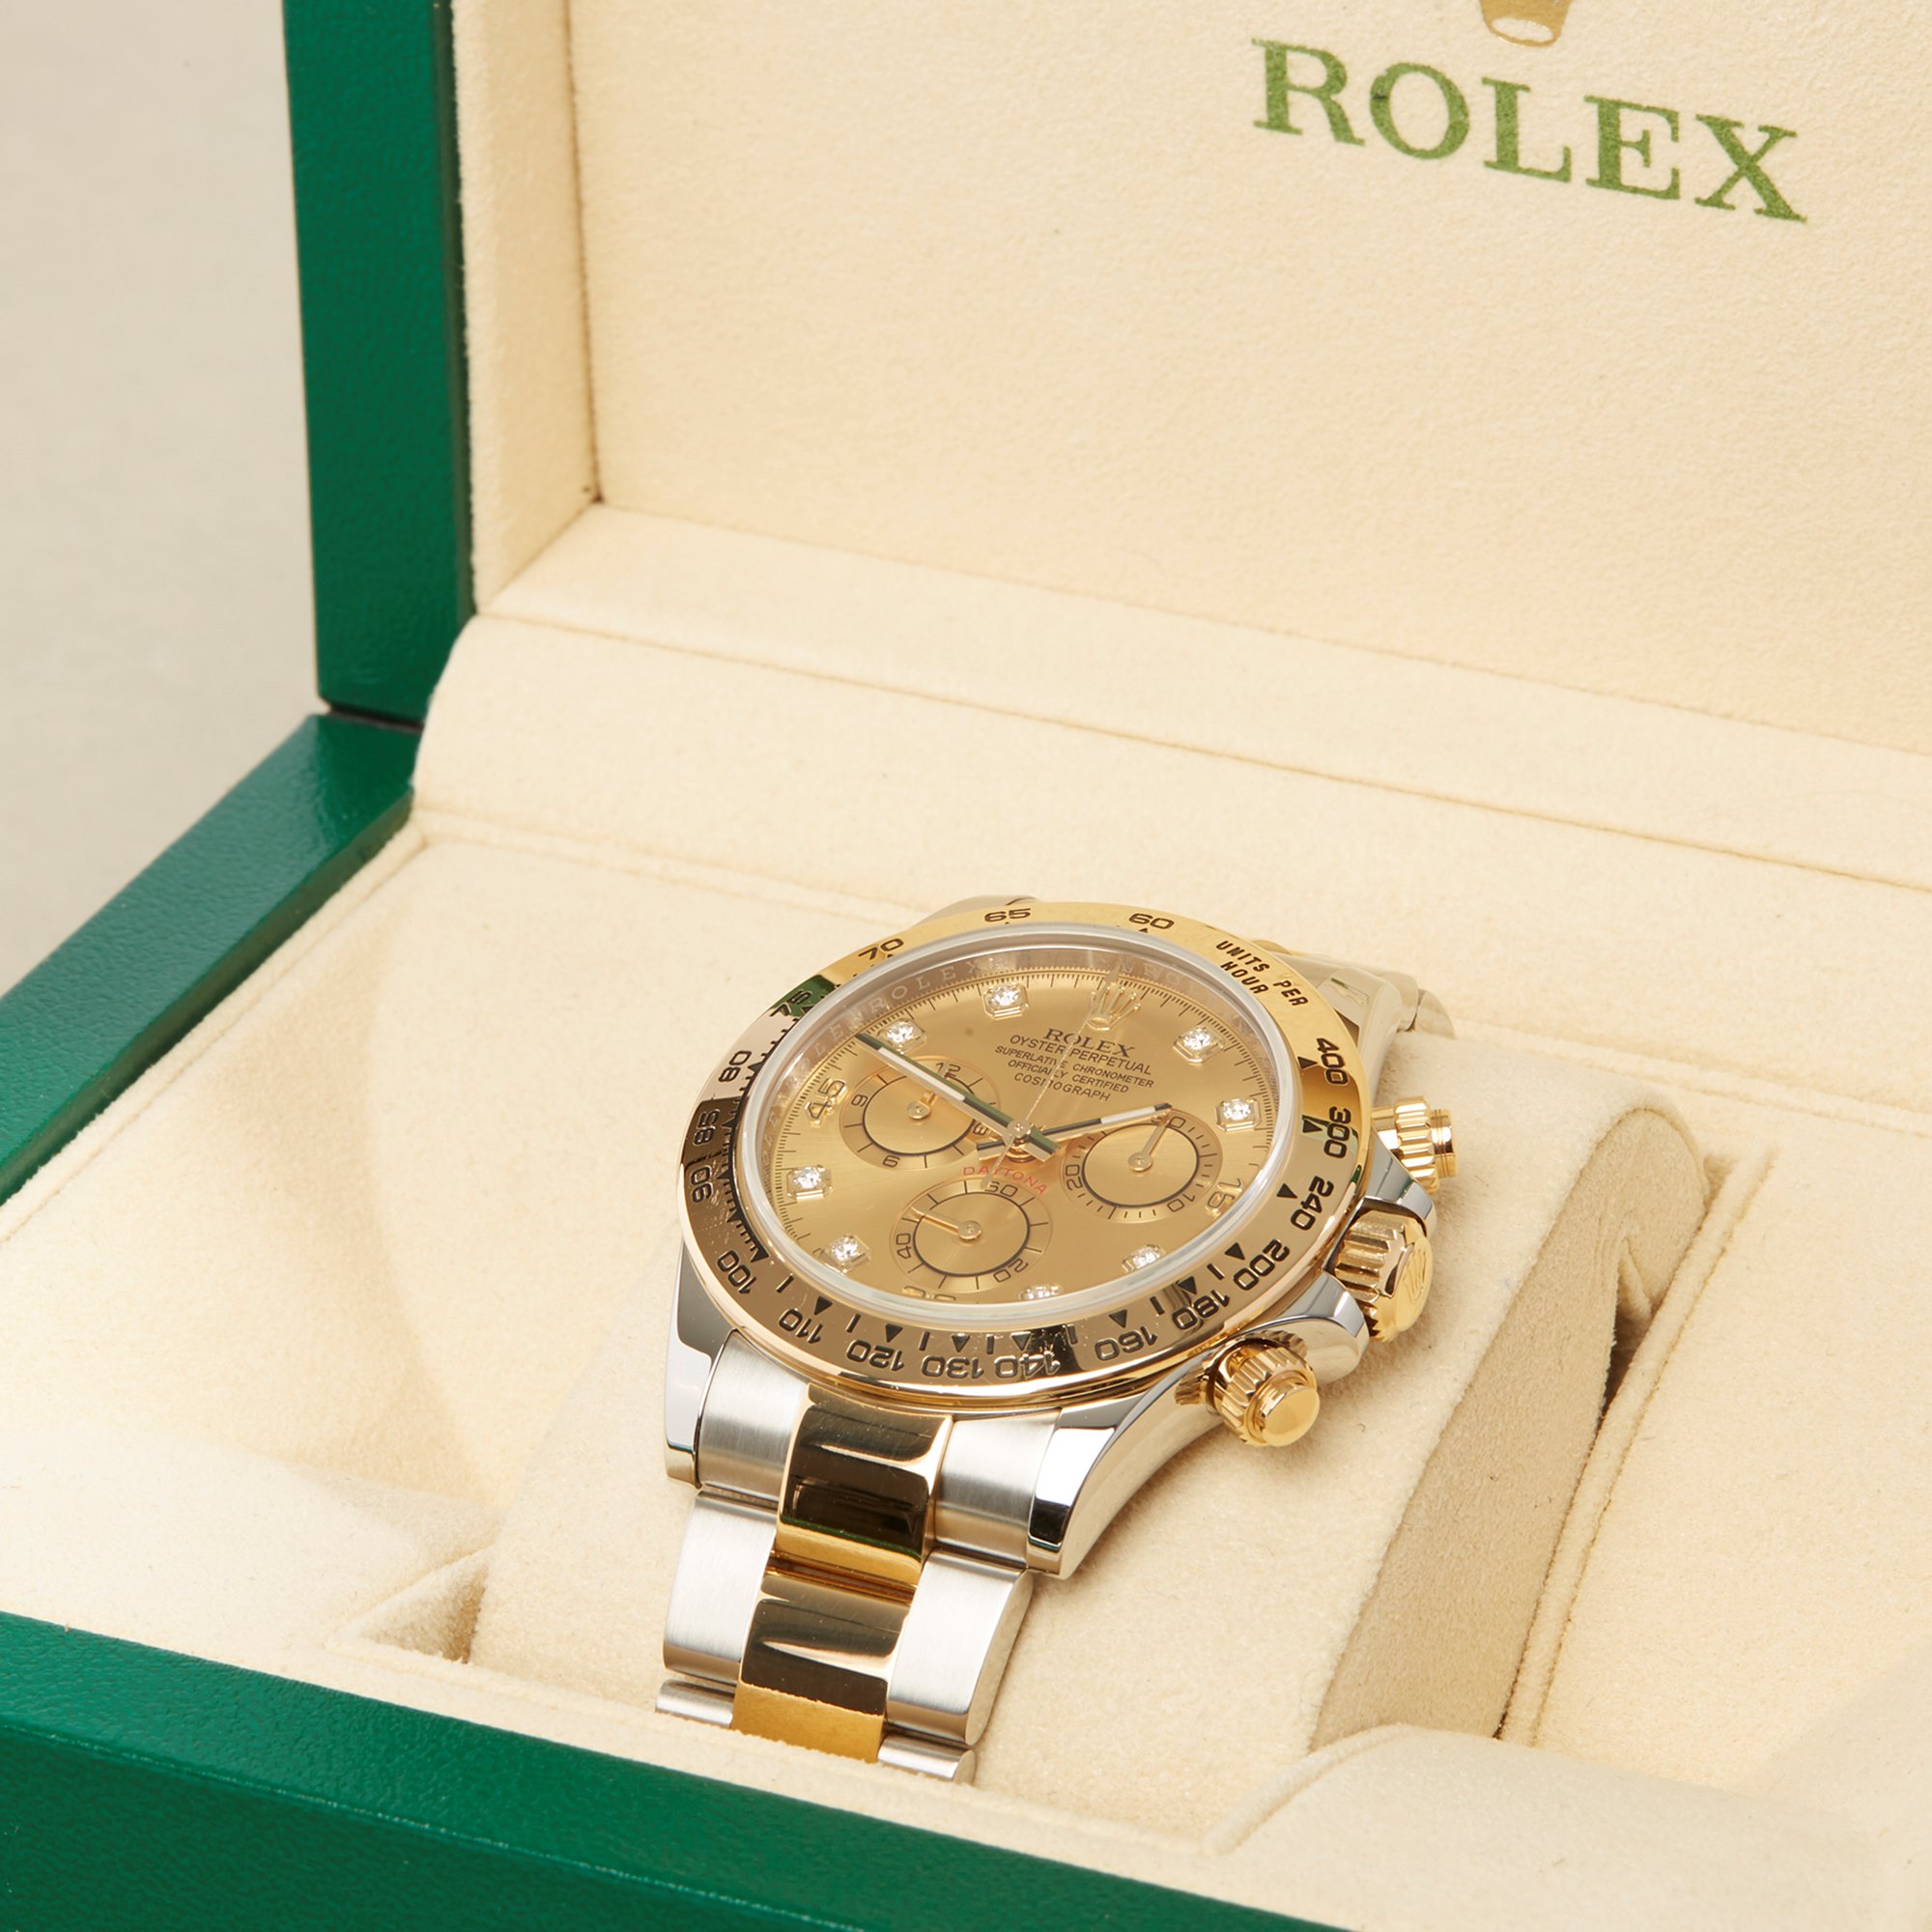 Rolex Daytona 116503 Men's Yellow Gold & Stainless Steel Diamond Chronograph Watch - Image 2 of 10